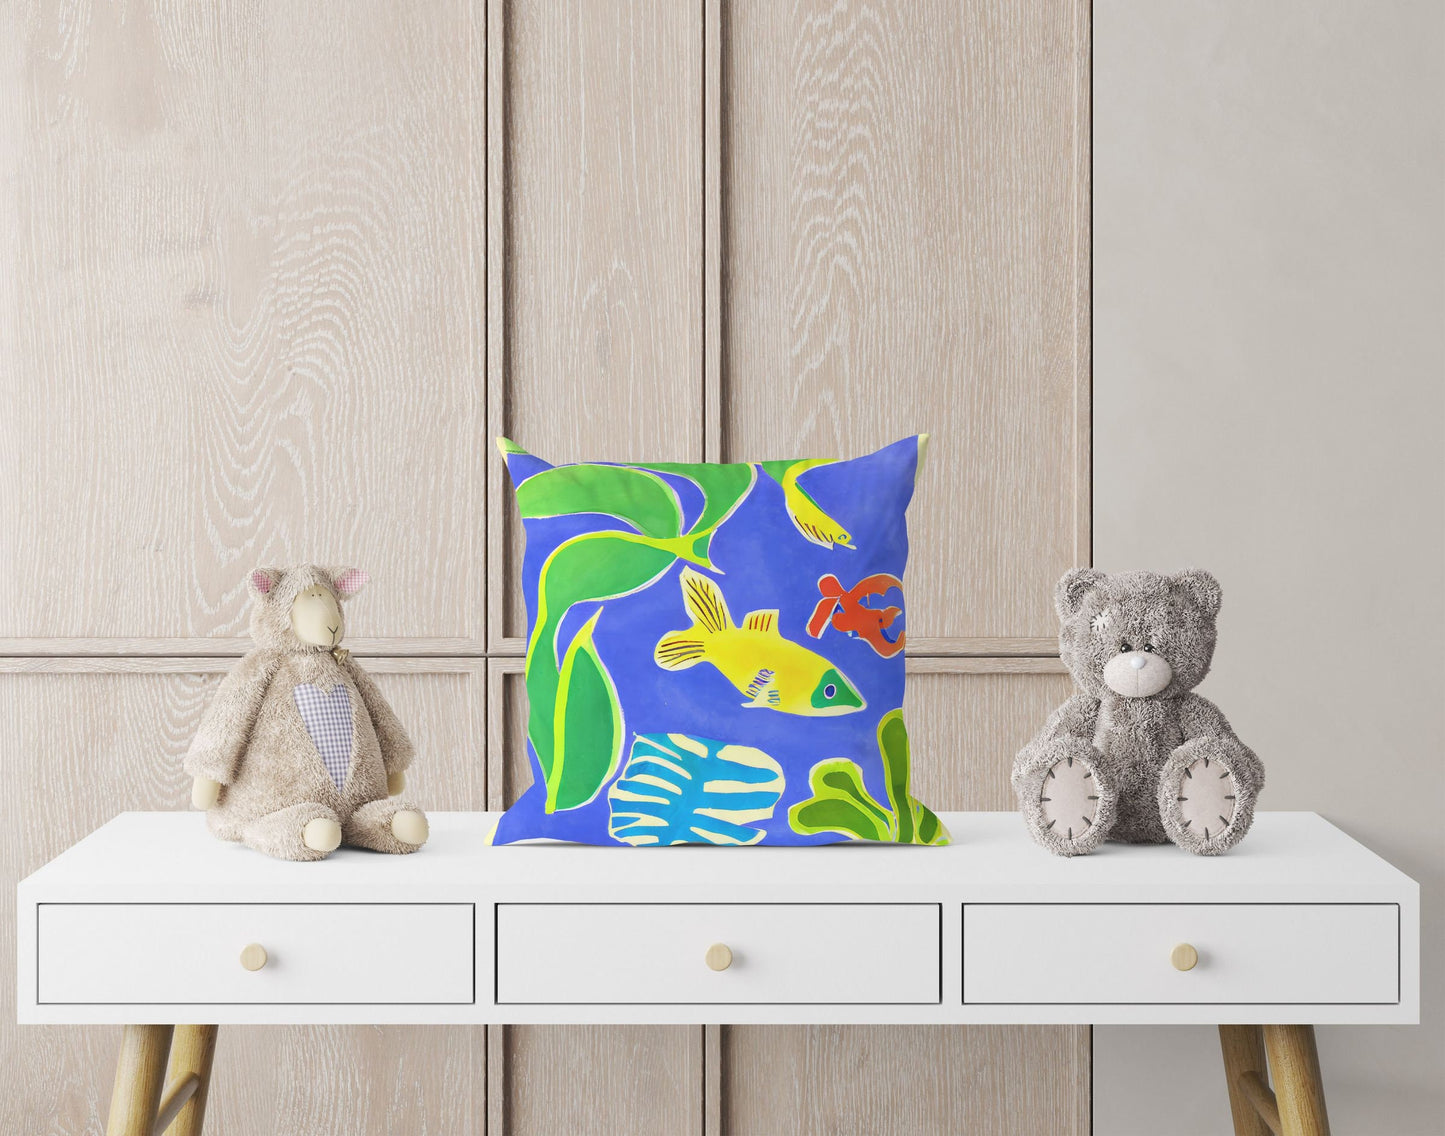 Tropical Fish Toss Pillow, Abstract Pillow, Artist Pillow, Colorful Pillow Case, Contemporary Pillow, 24X24 Pillow Case, Nursery Pillows